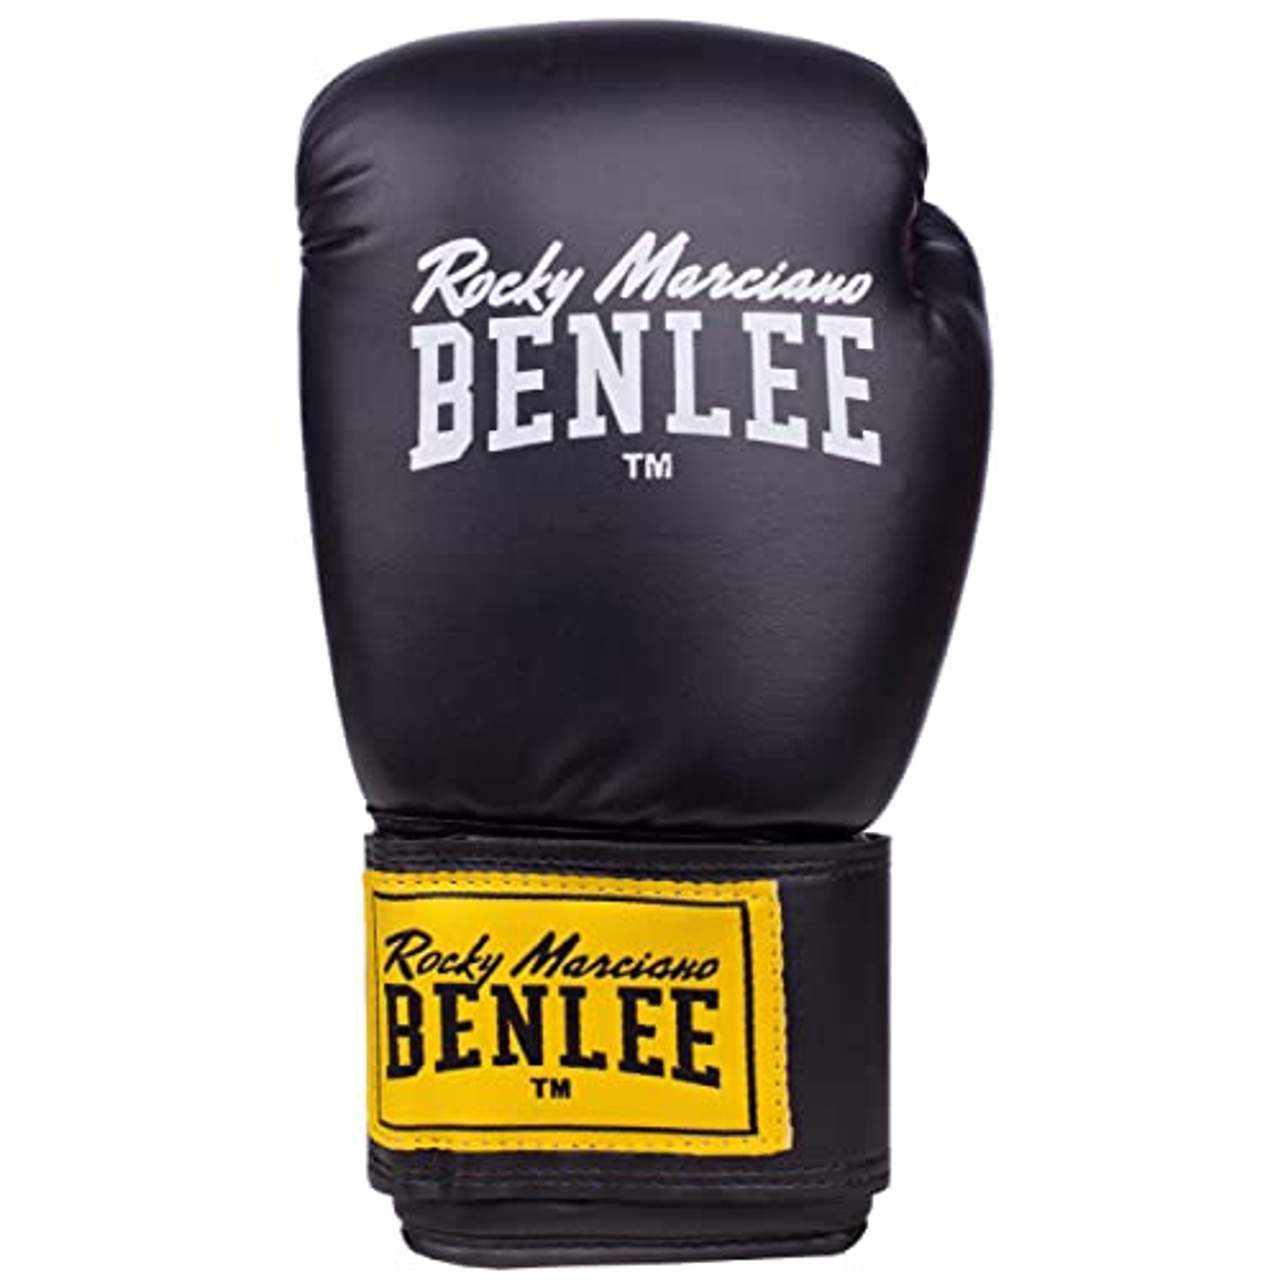 BENLEE Rocky Marciano Boxhandschuhe Training Gloves Rodney